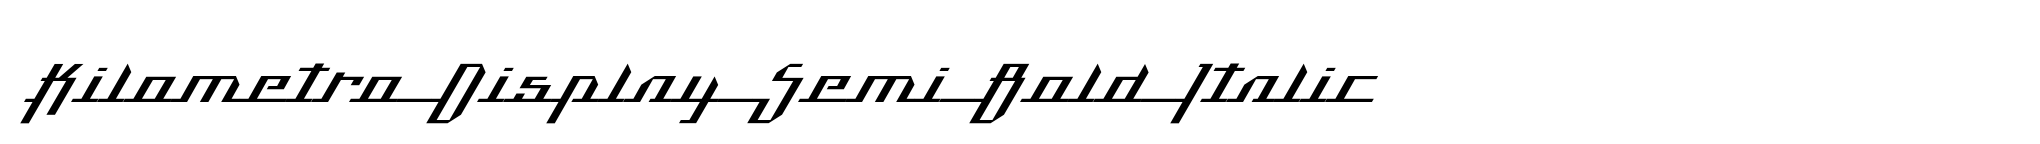 Kilometro Display Semi Bold Italic image